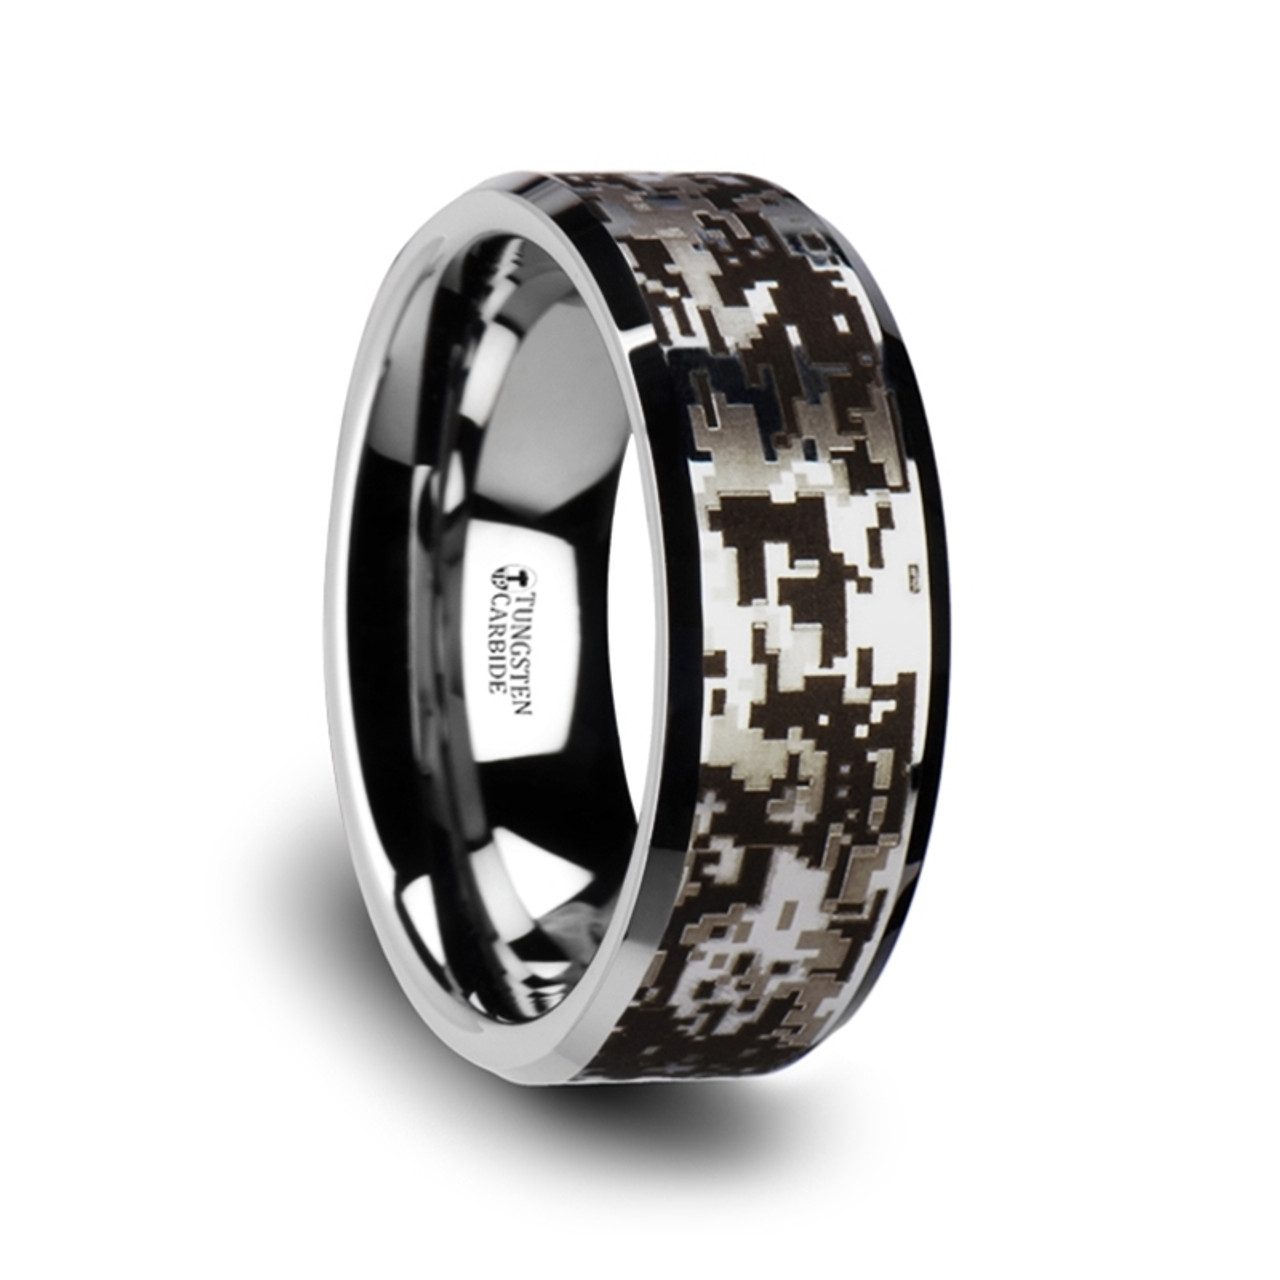 Mens & Womens Camo Engagement Wedding Rings Set Silver & Titanium (Size His  05, Hers 05) | Amazon.com